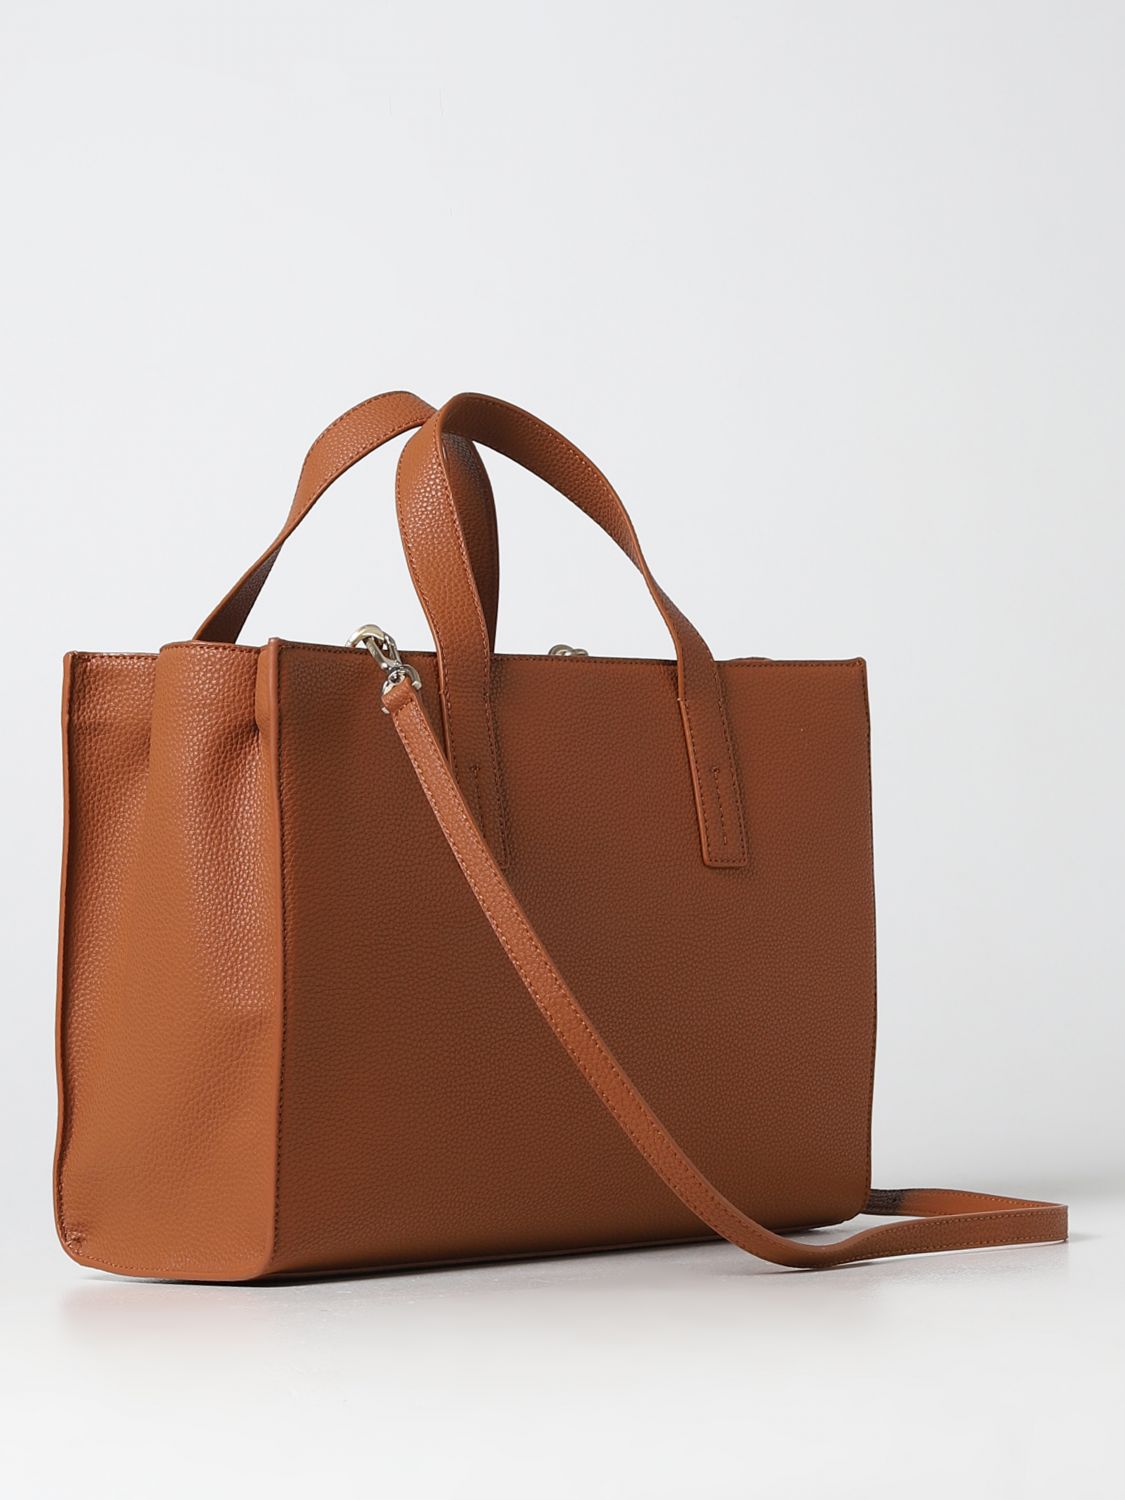 CALVIN KLEIN: handbag for woman - Leather | Calvin Klein handbag online on GIGLIO.COM